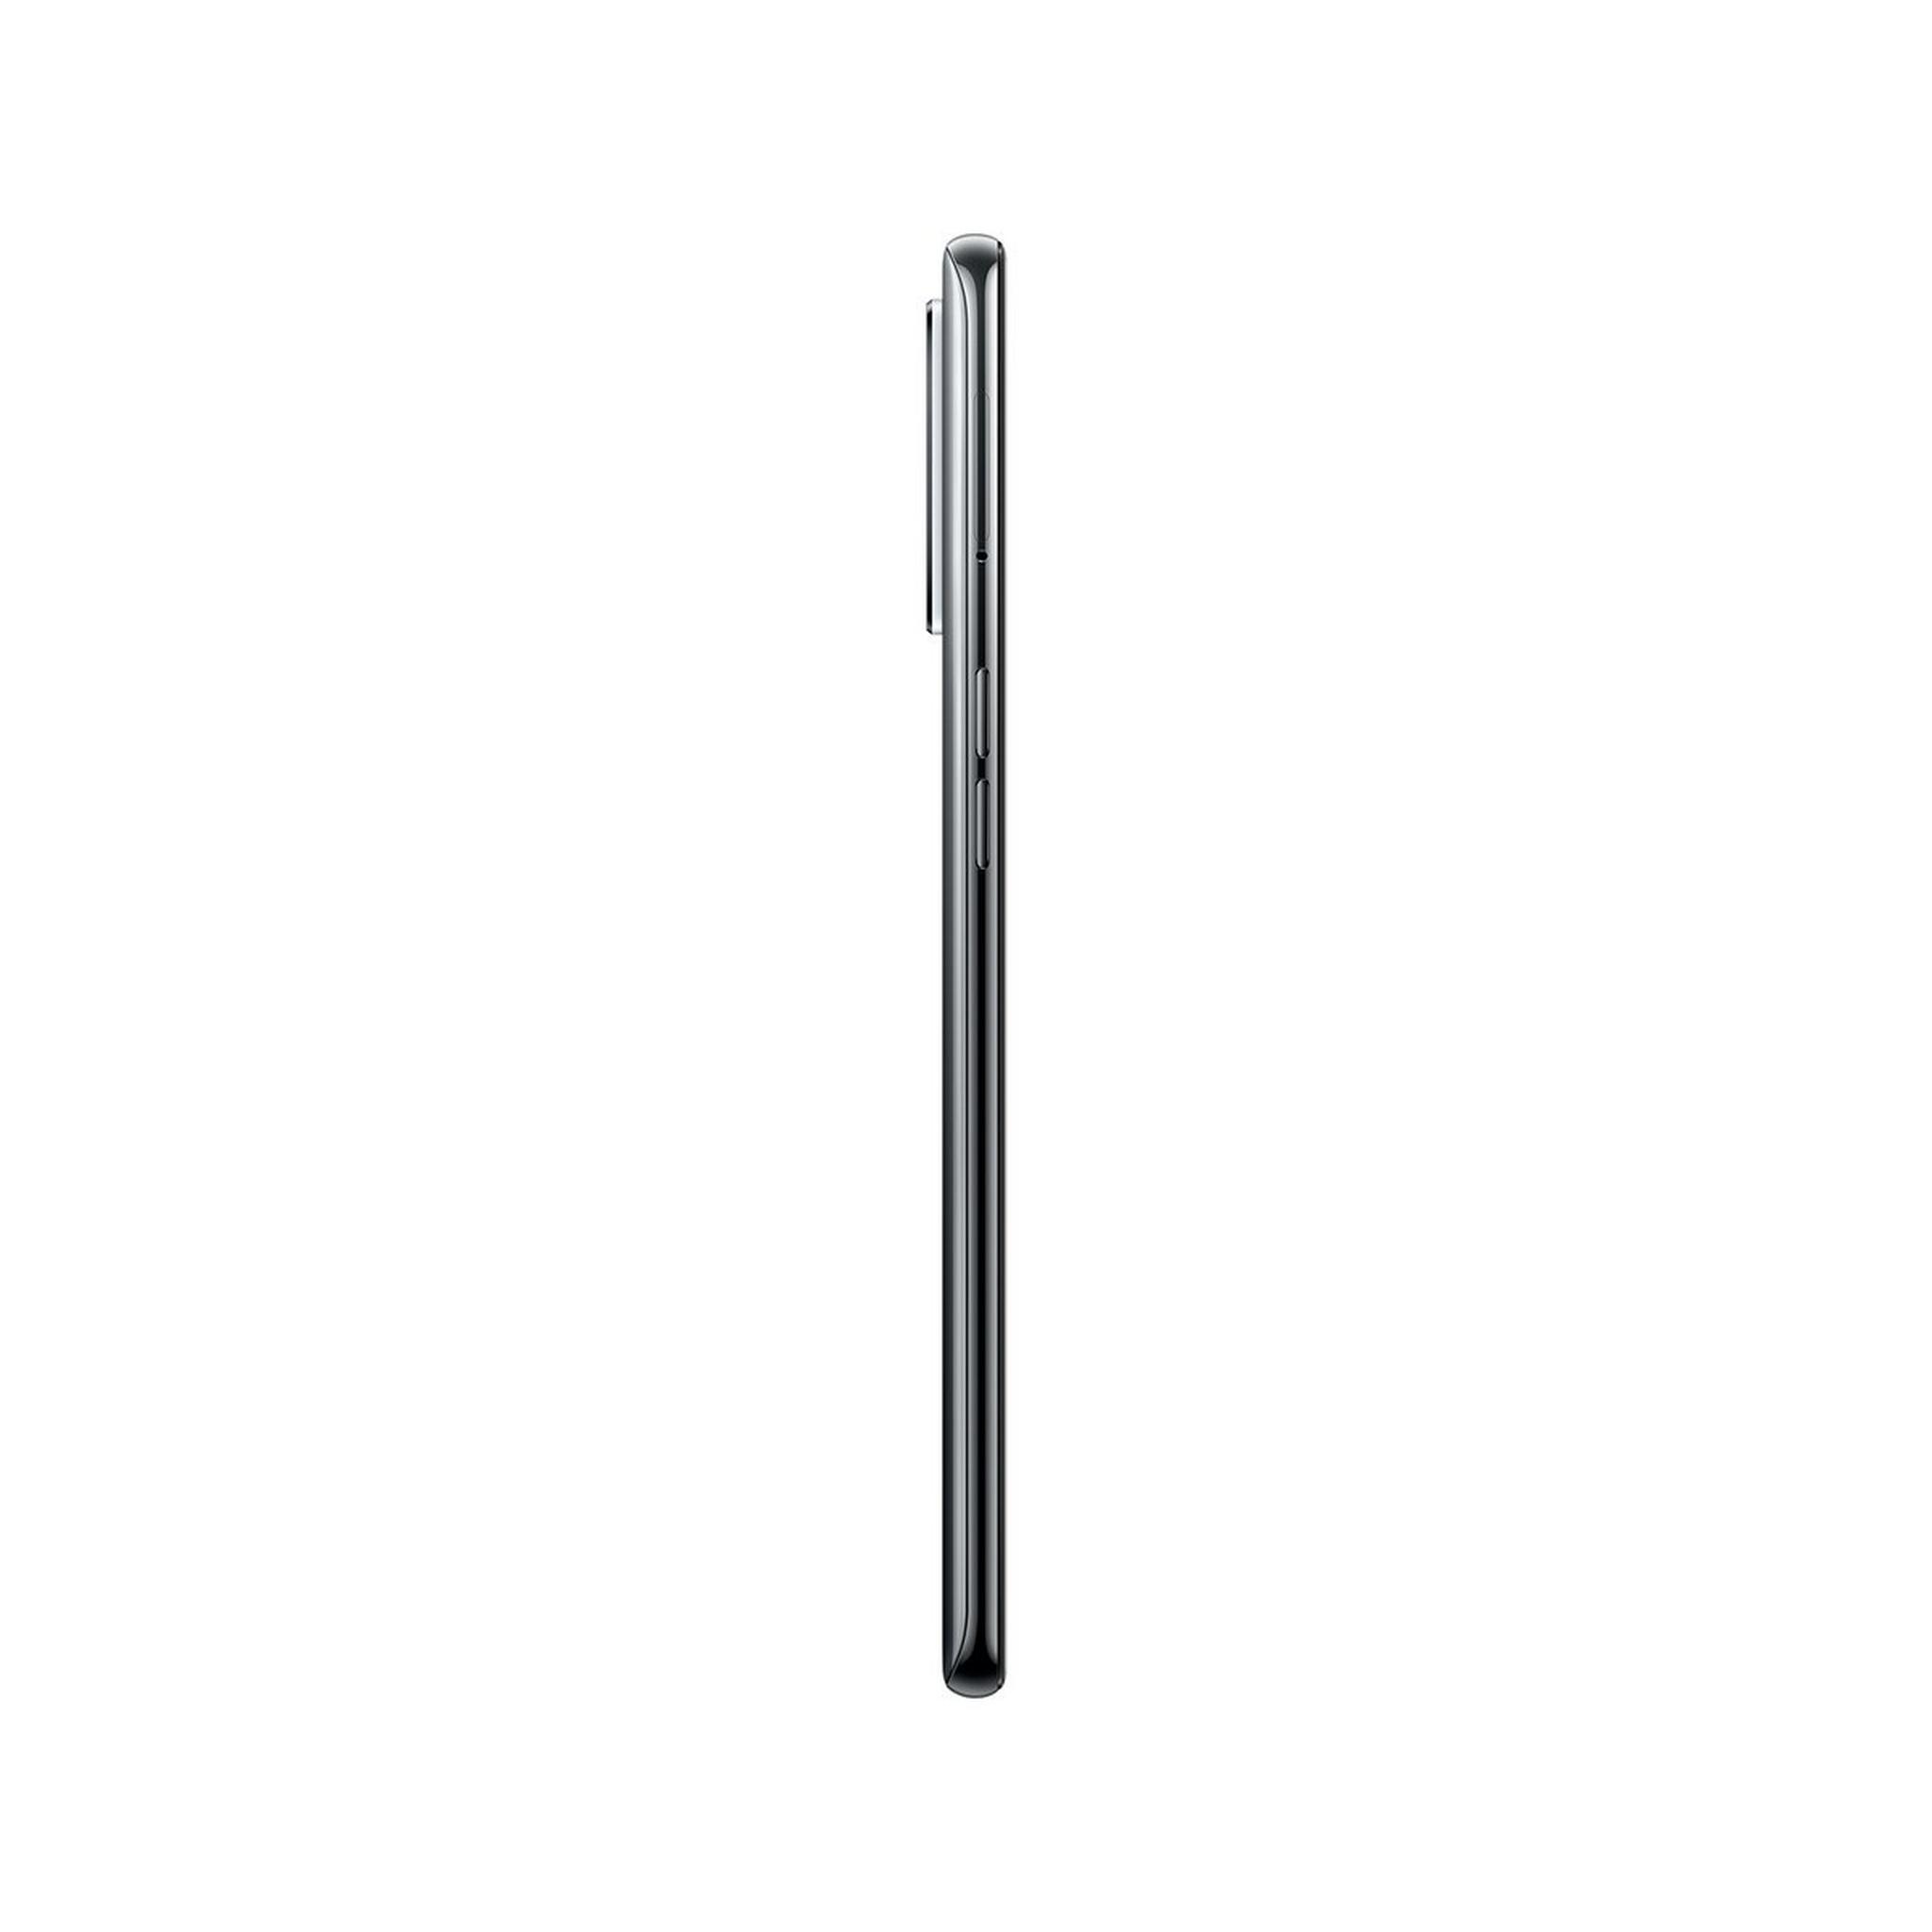 Oppo A94 128GB Dual SIM Phone – Black